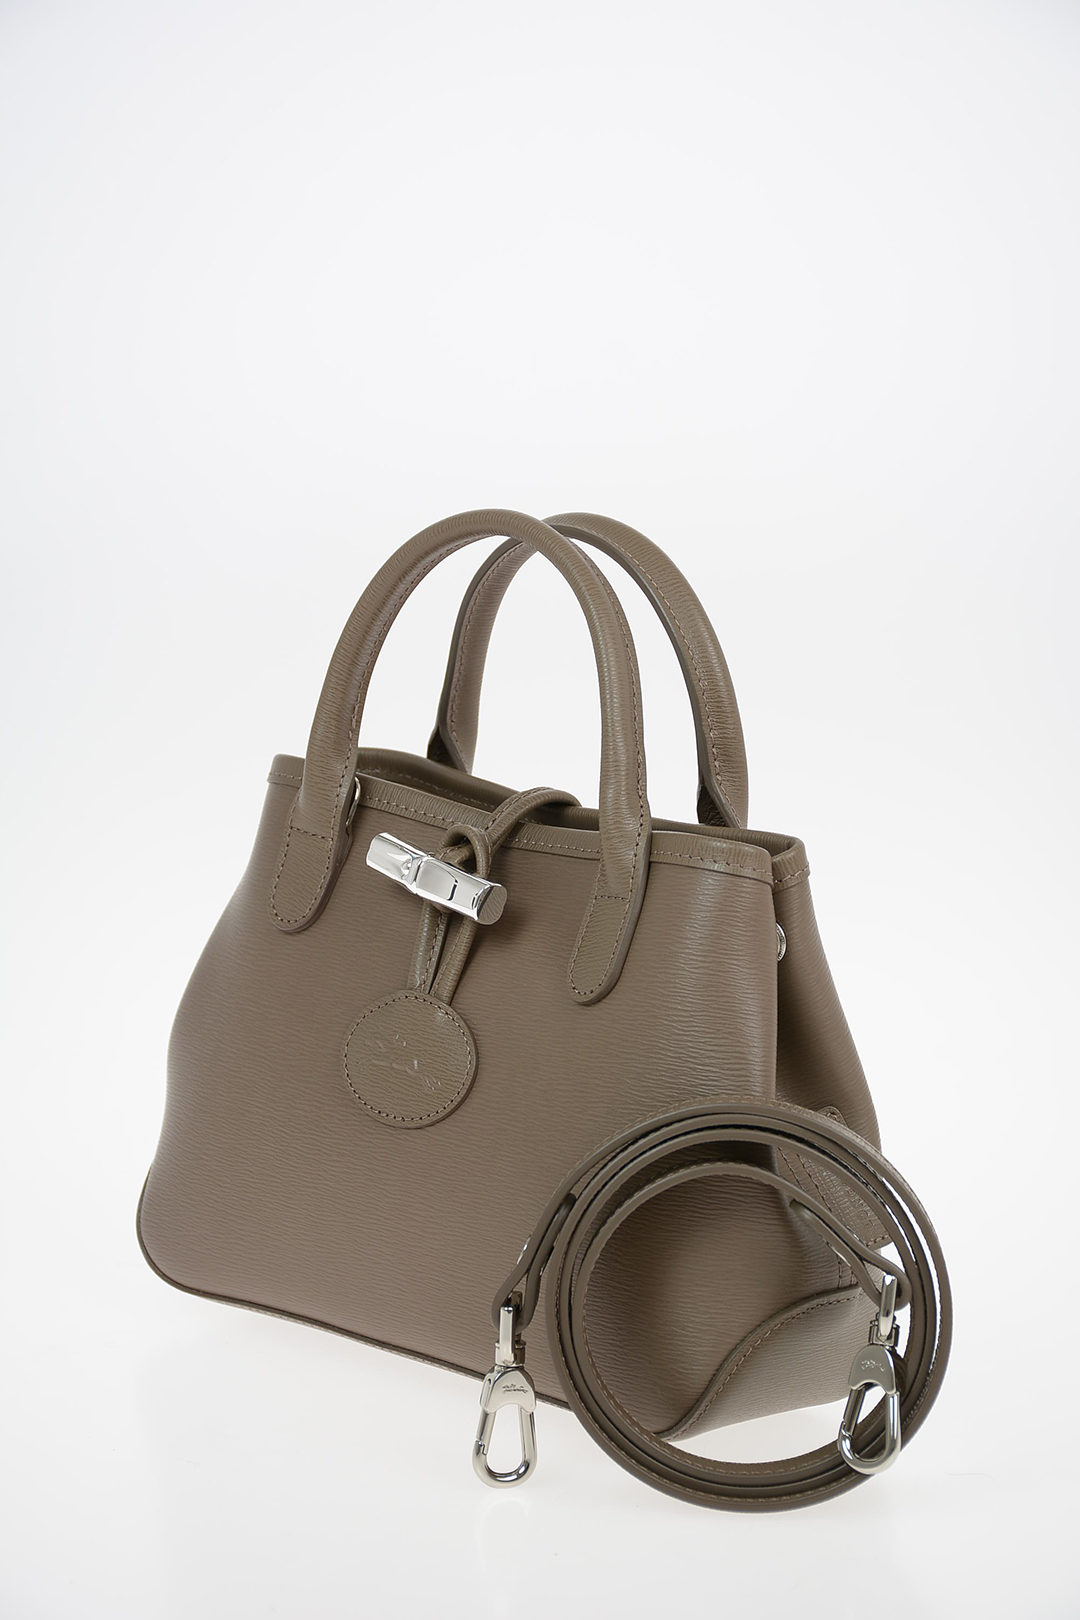 Longchamp, Bags, Longchamp Roseau Leather Cross Body Bag